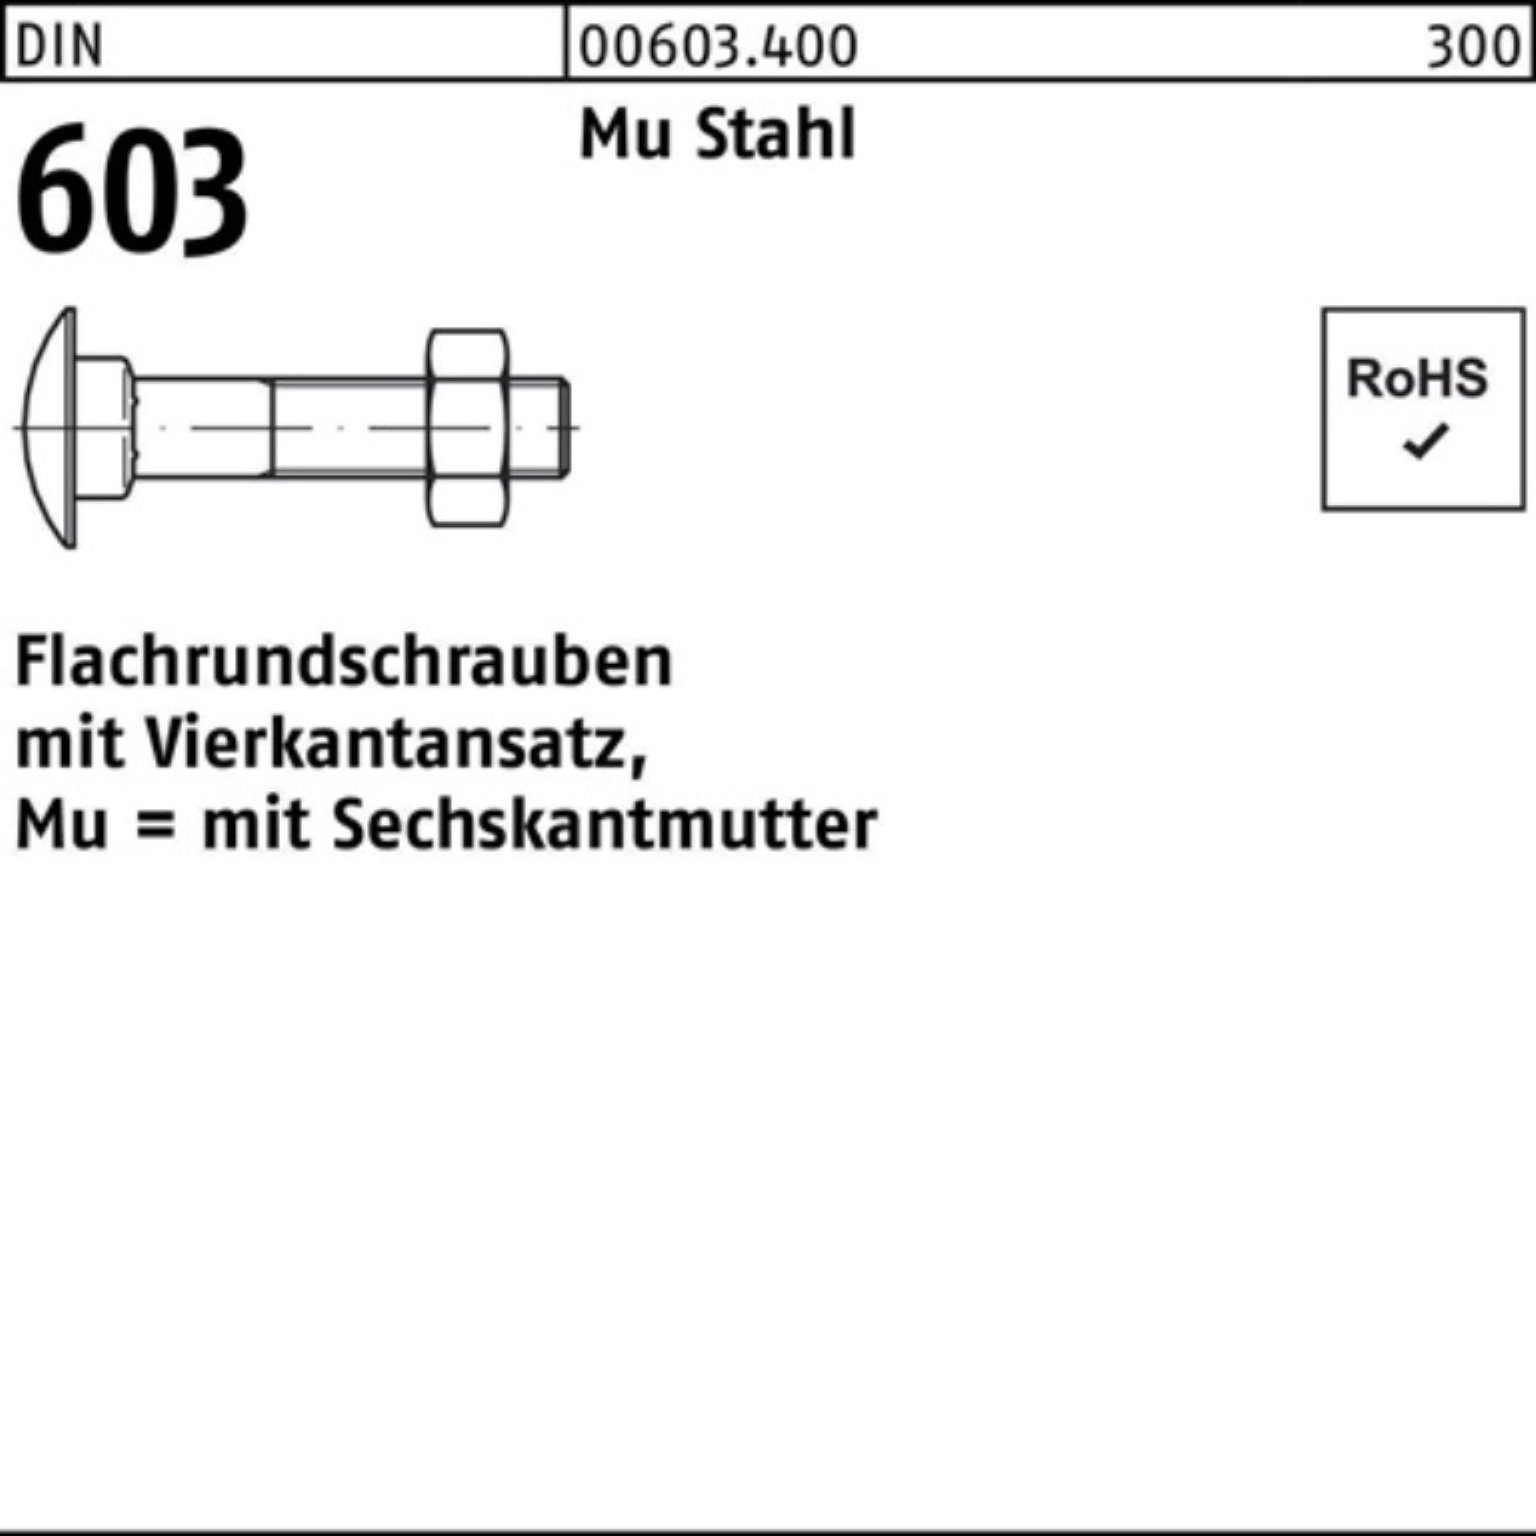 Pack 603 DIN Reyher Vierkantansatz/6-ktmutter 100er Schraube Flachrundschraube M10x150